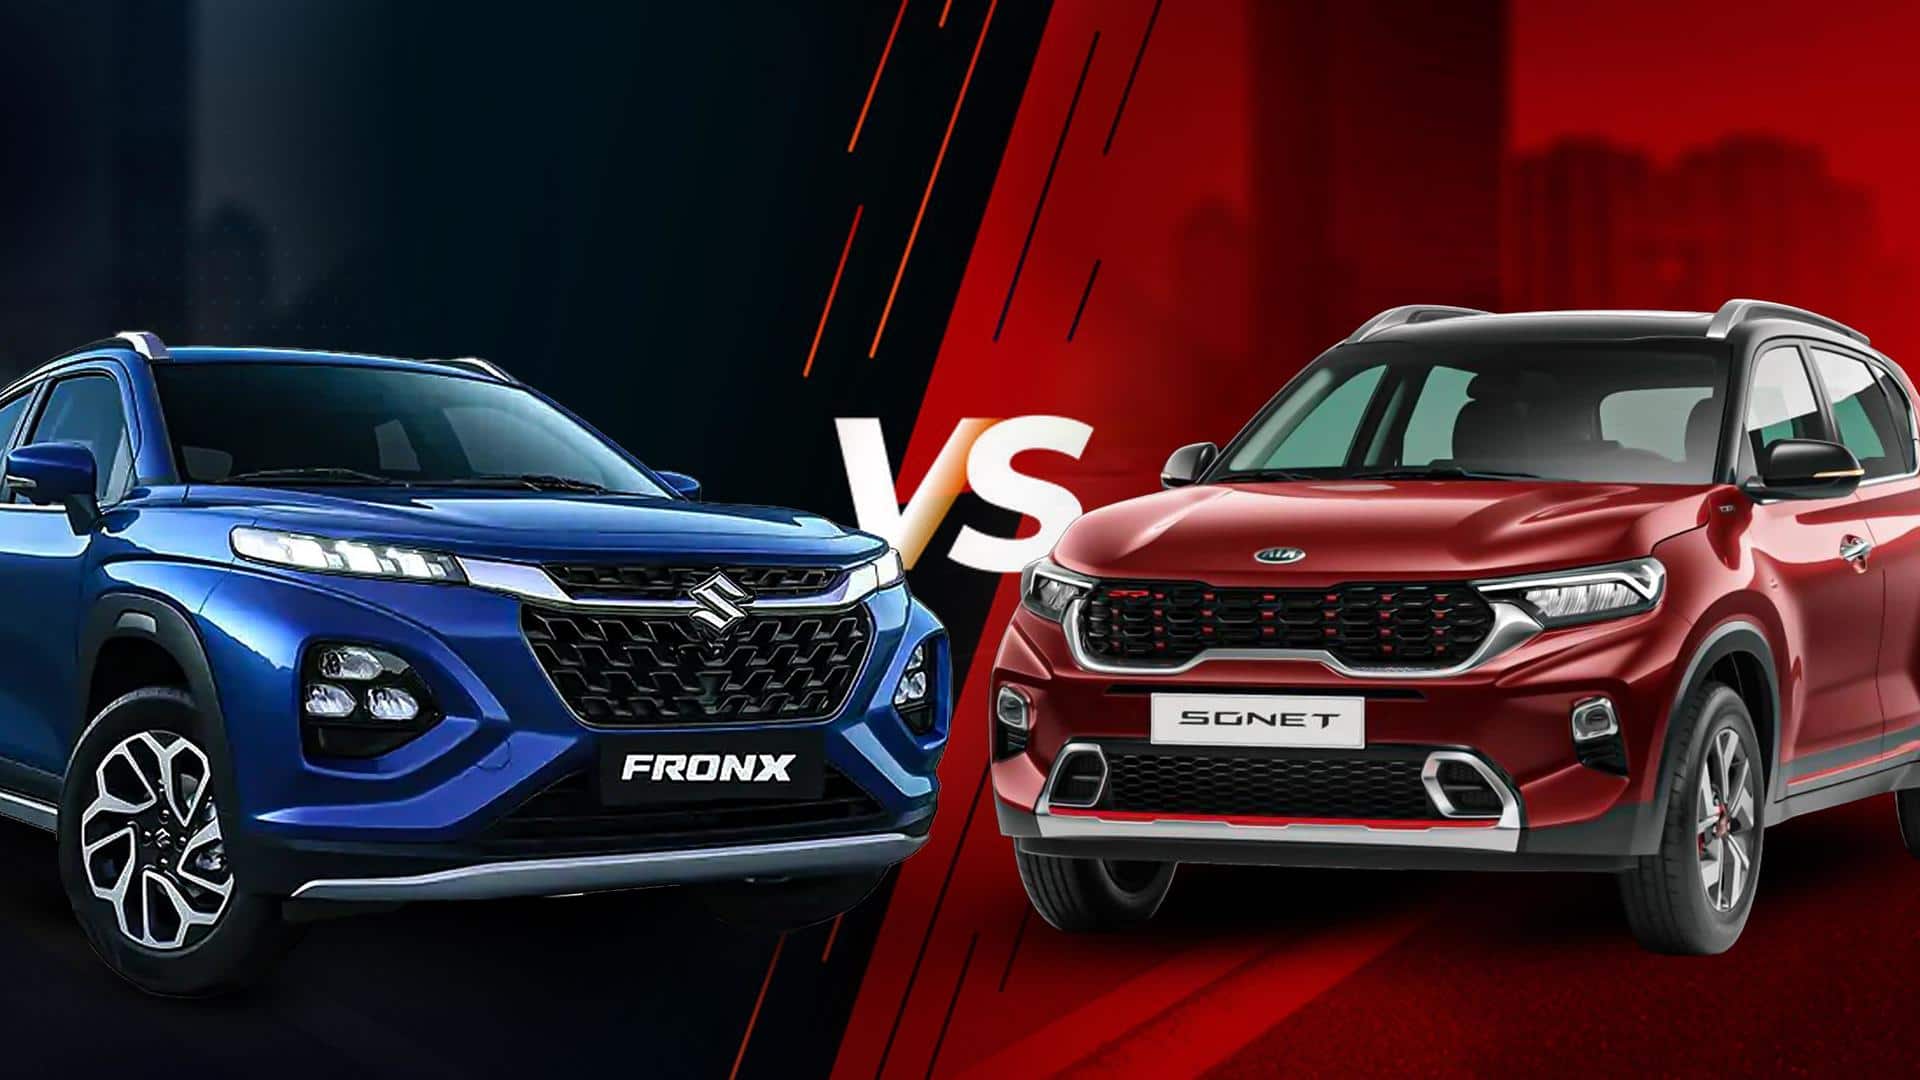 Maruti Suzuki Fronx v/s Kia Sonet: Which one is better?